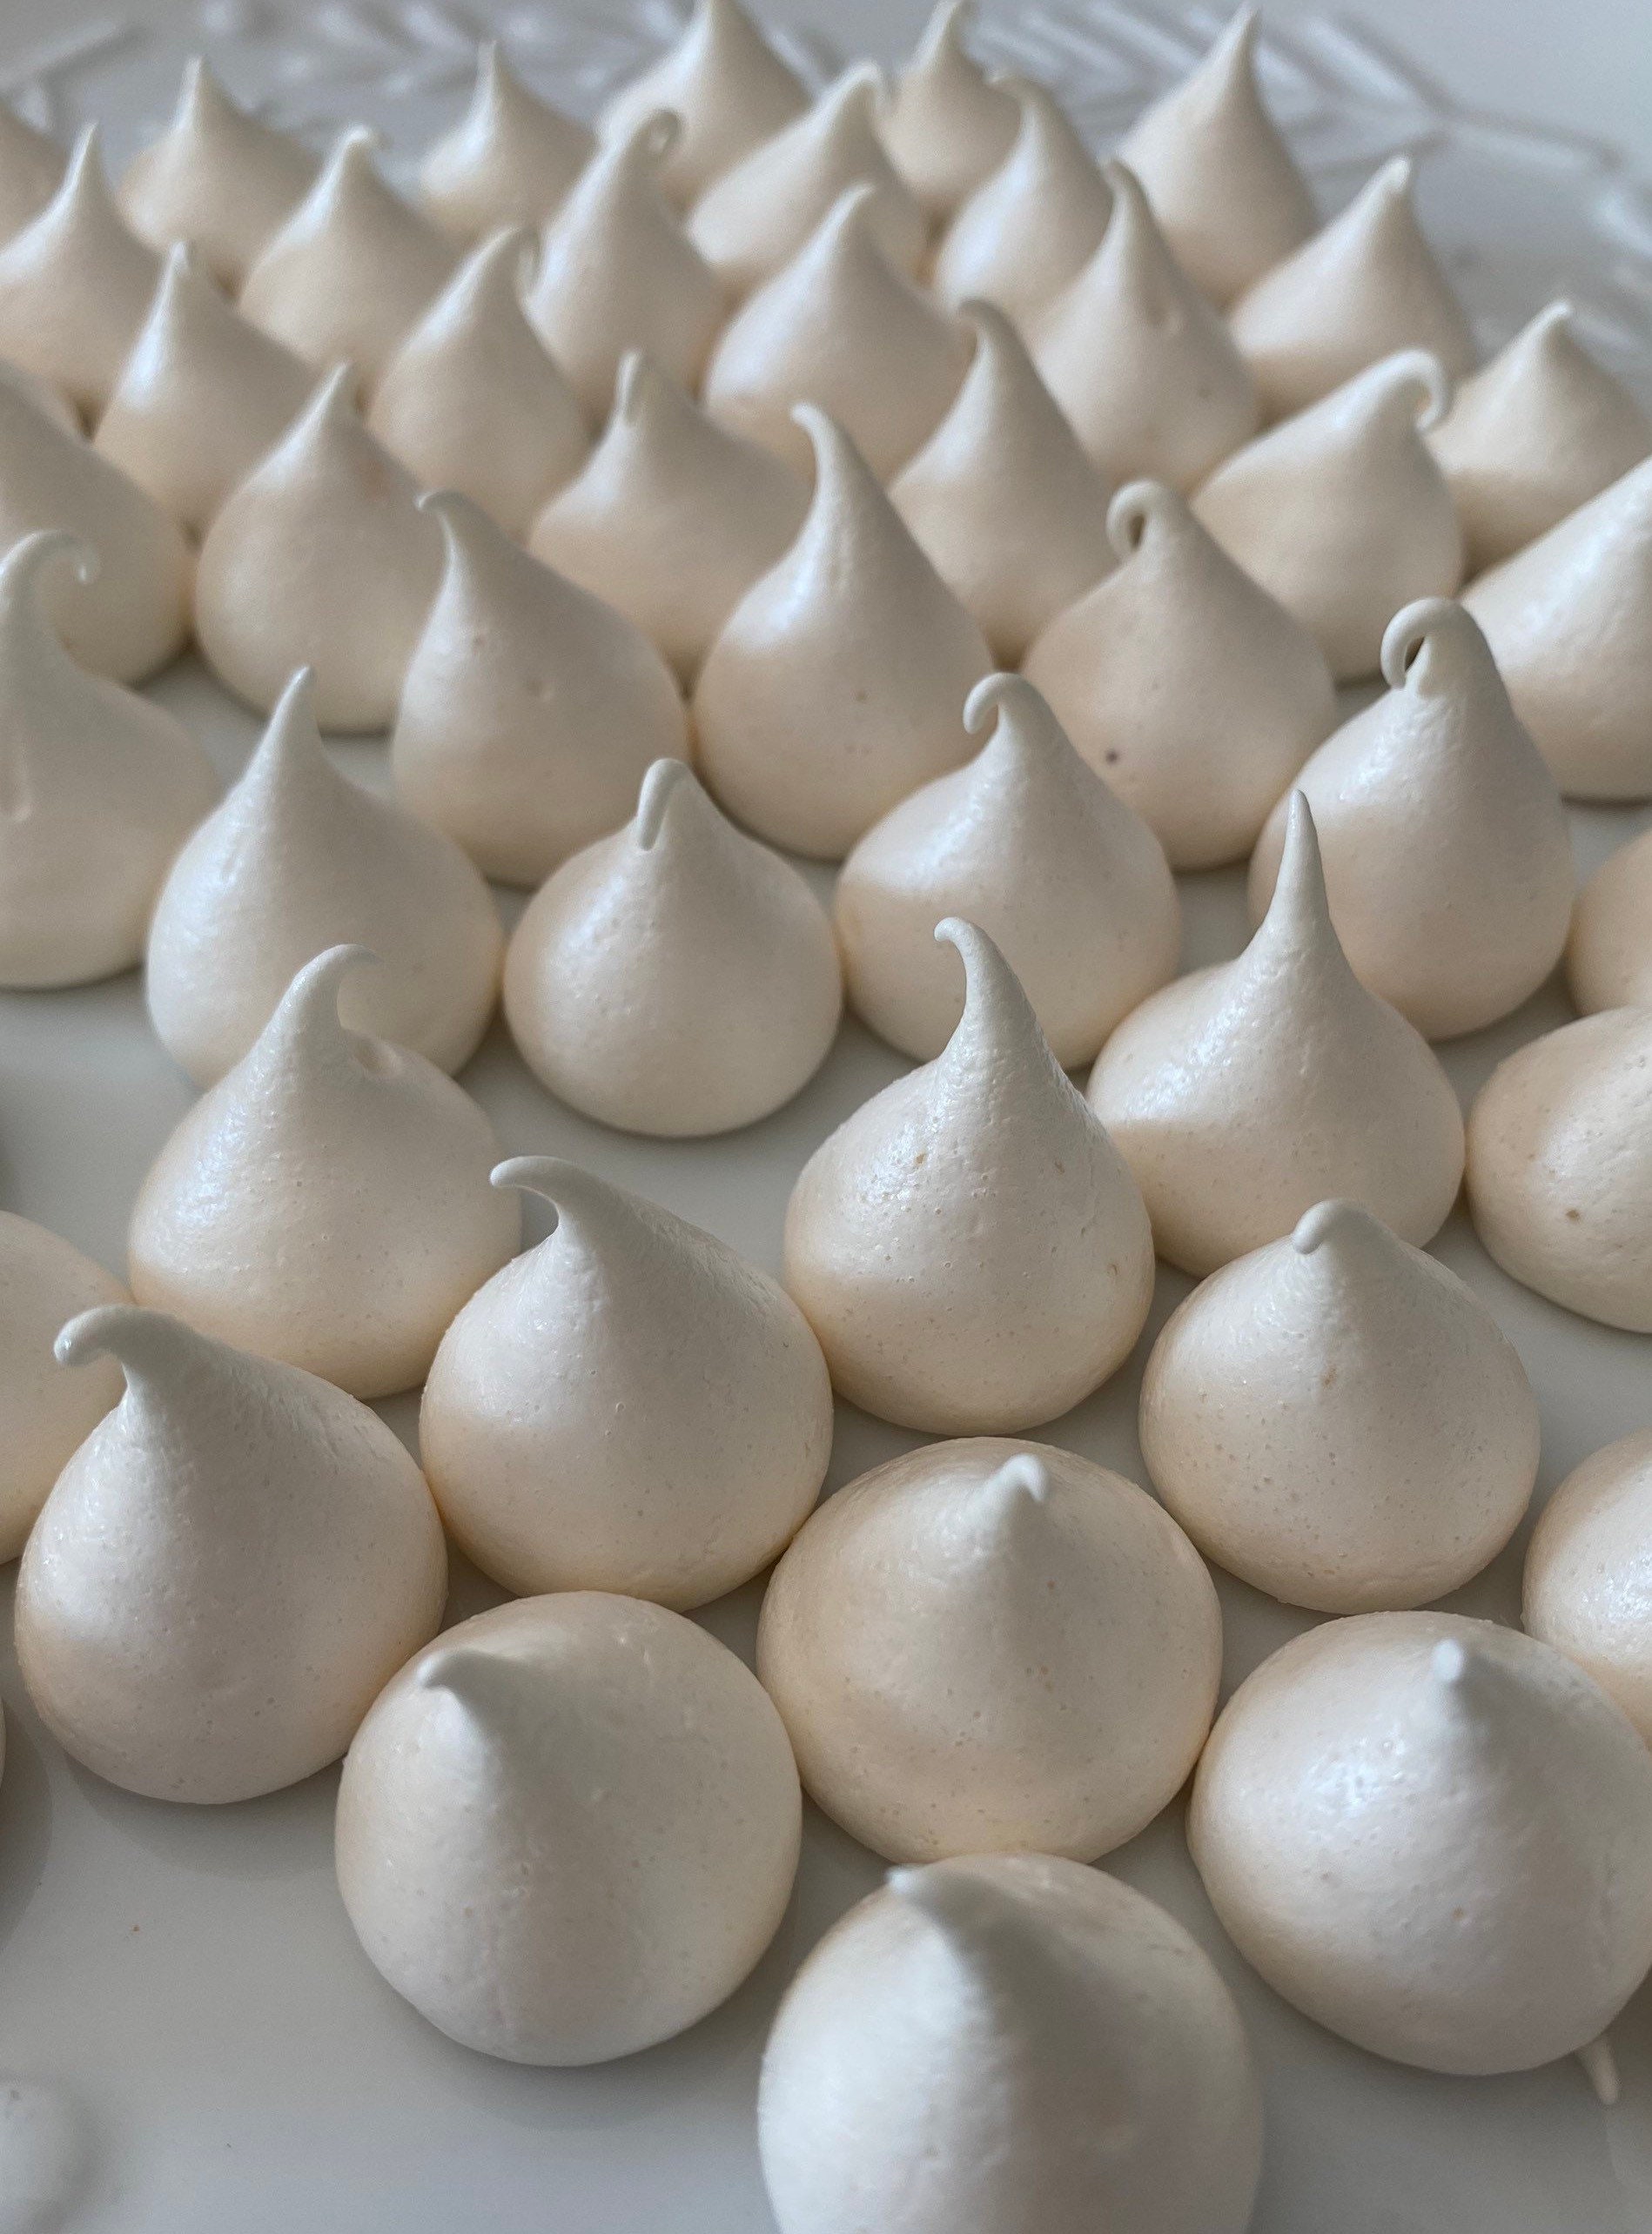 75 Baisers mini meringue faits maison nature | Etsy